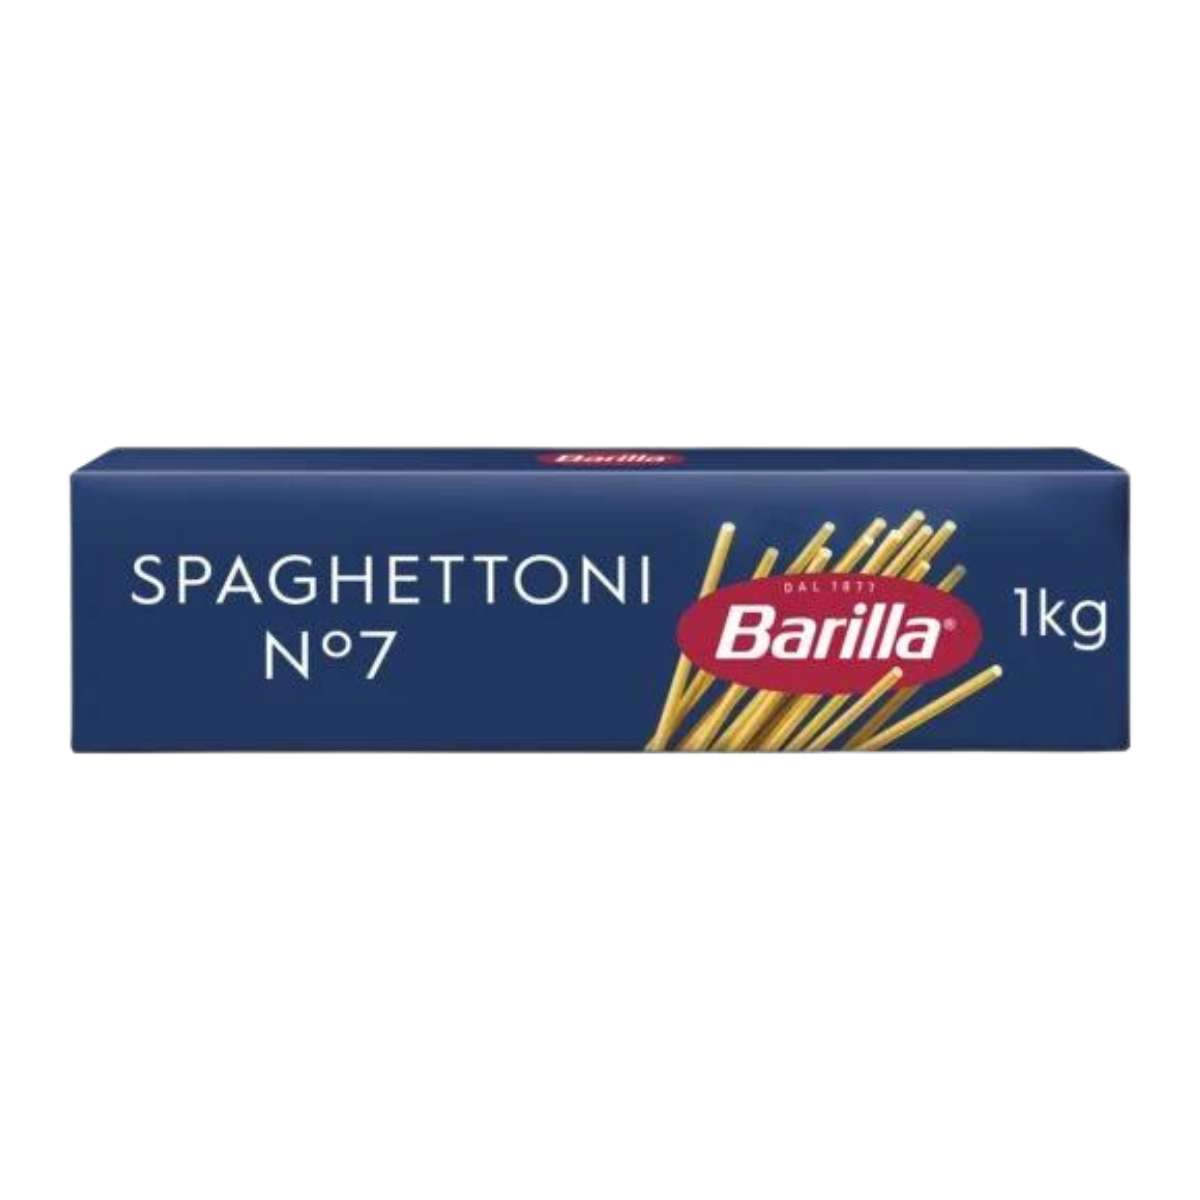 Pâtes Barilla Spaghettoni 1kg